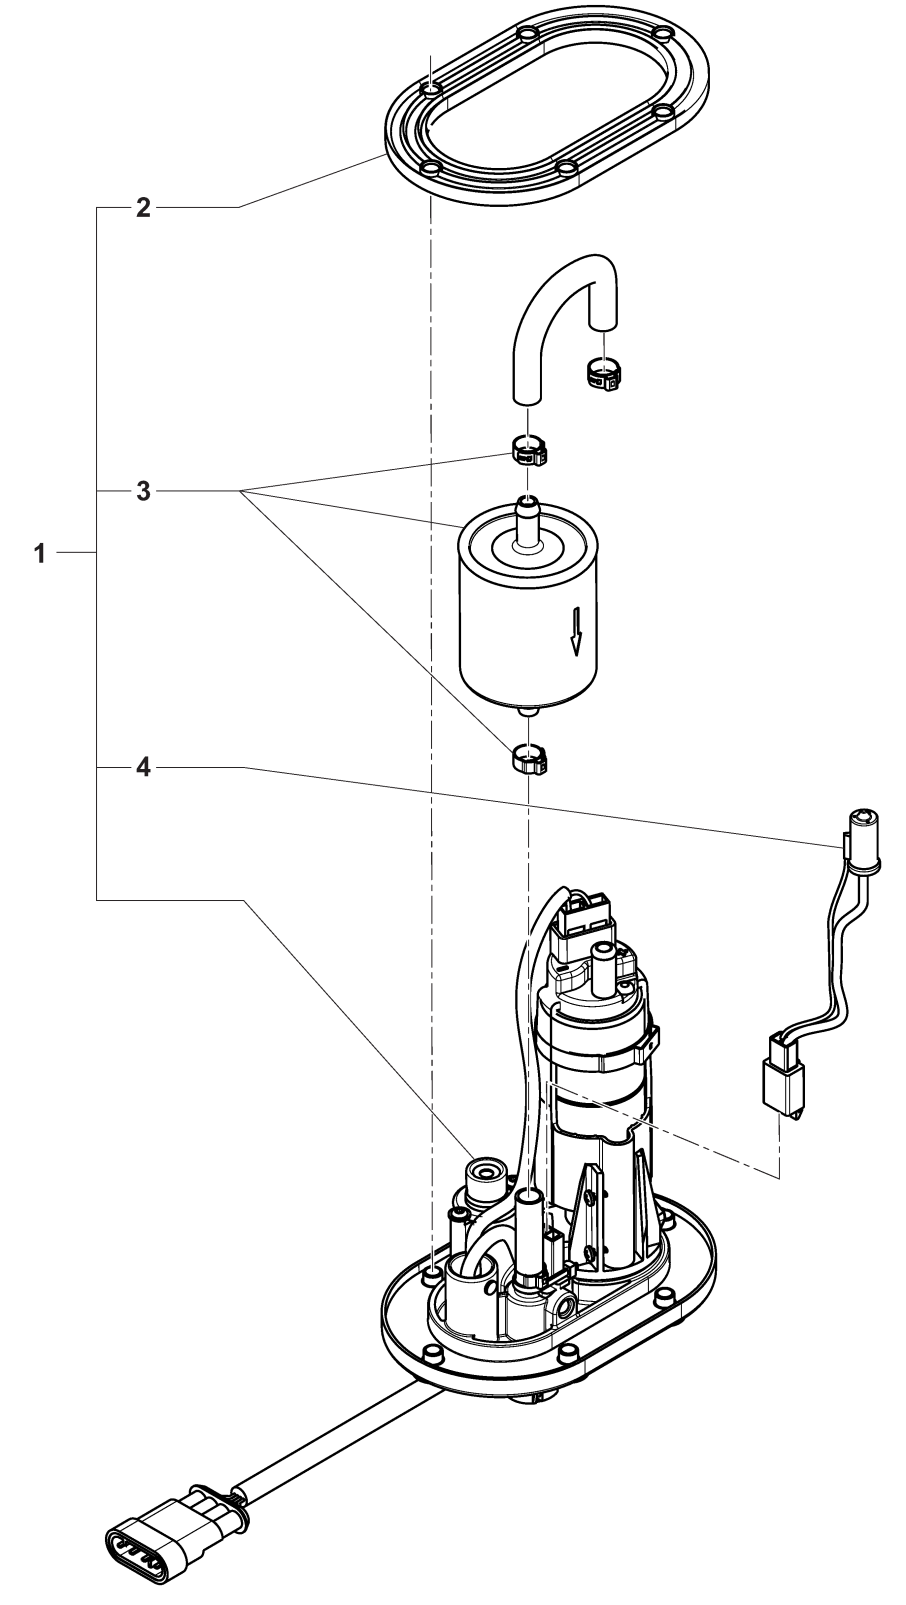 Fuel Pump Assembly


